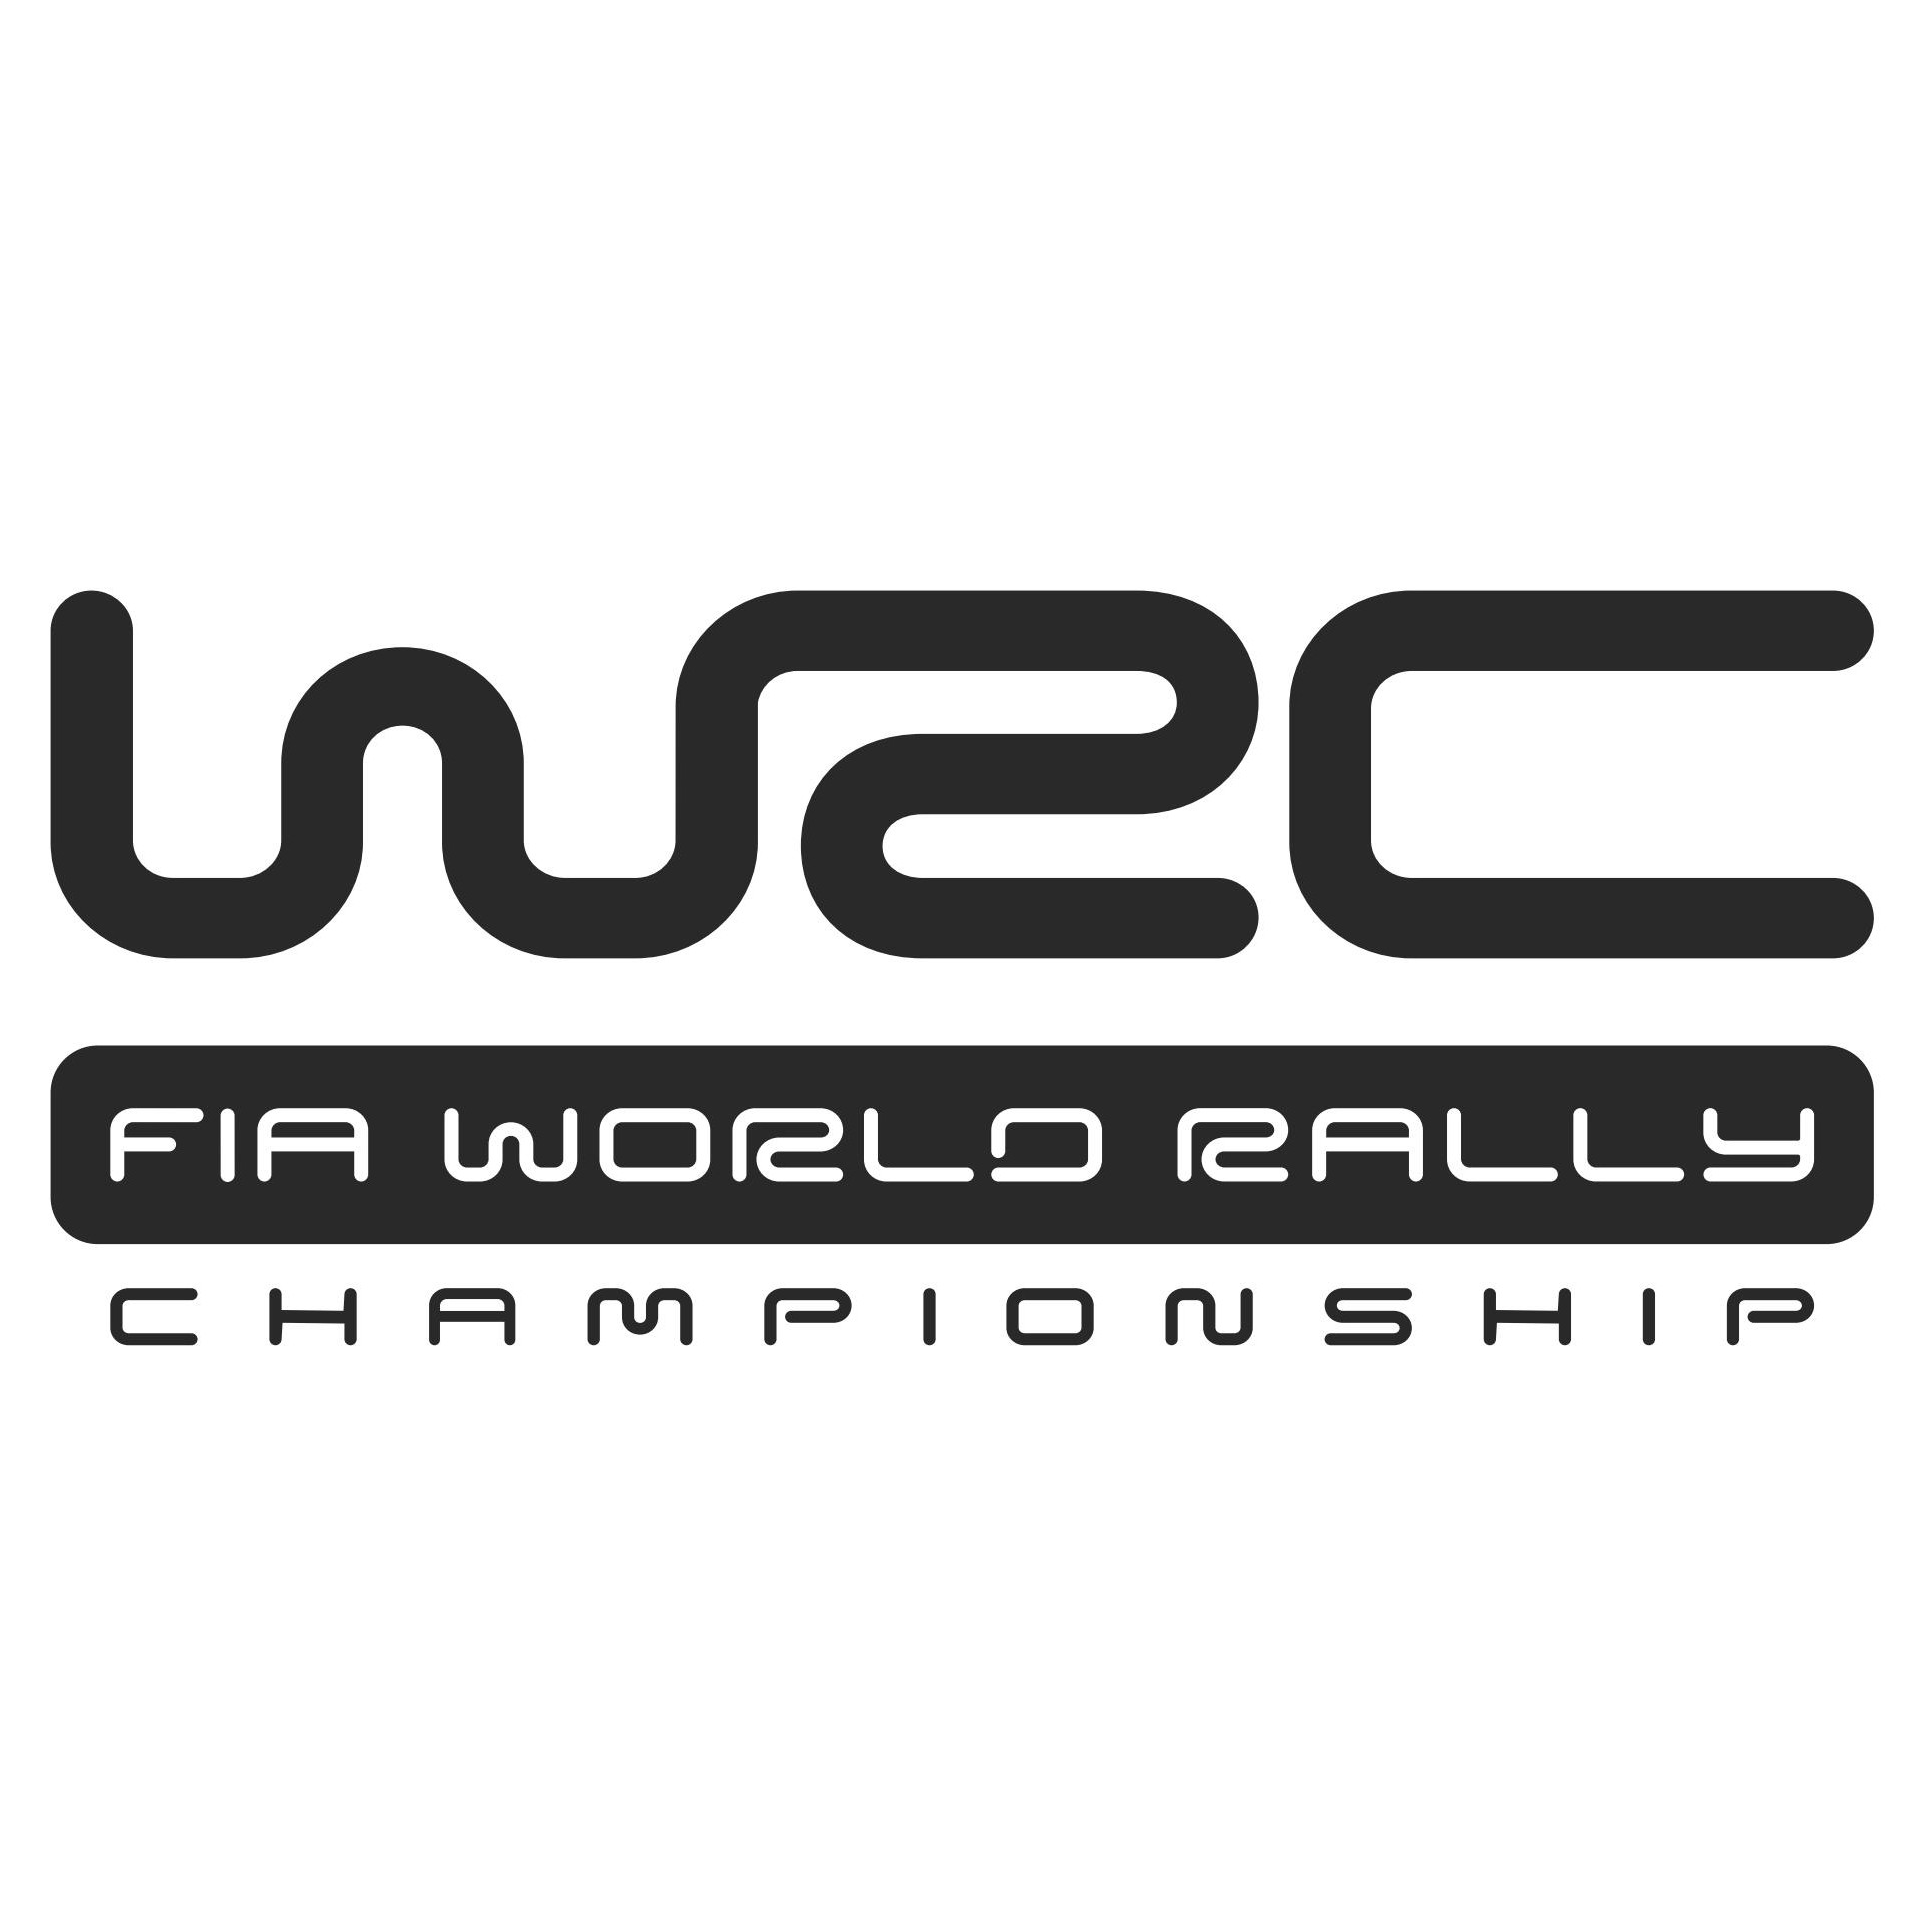 2015 World Rally Championship